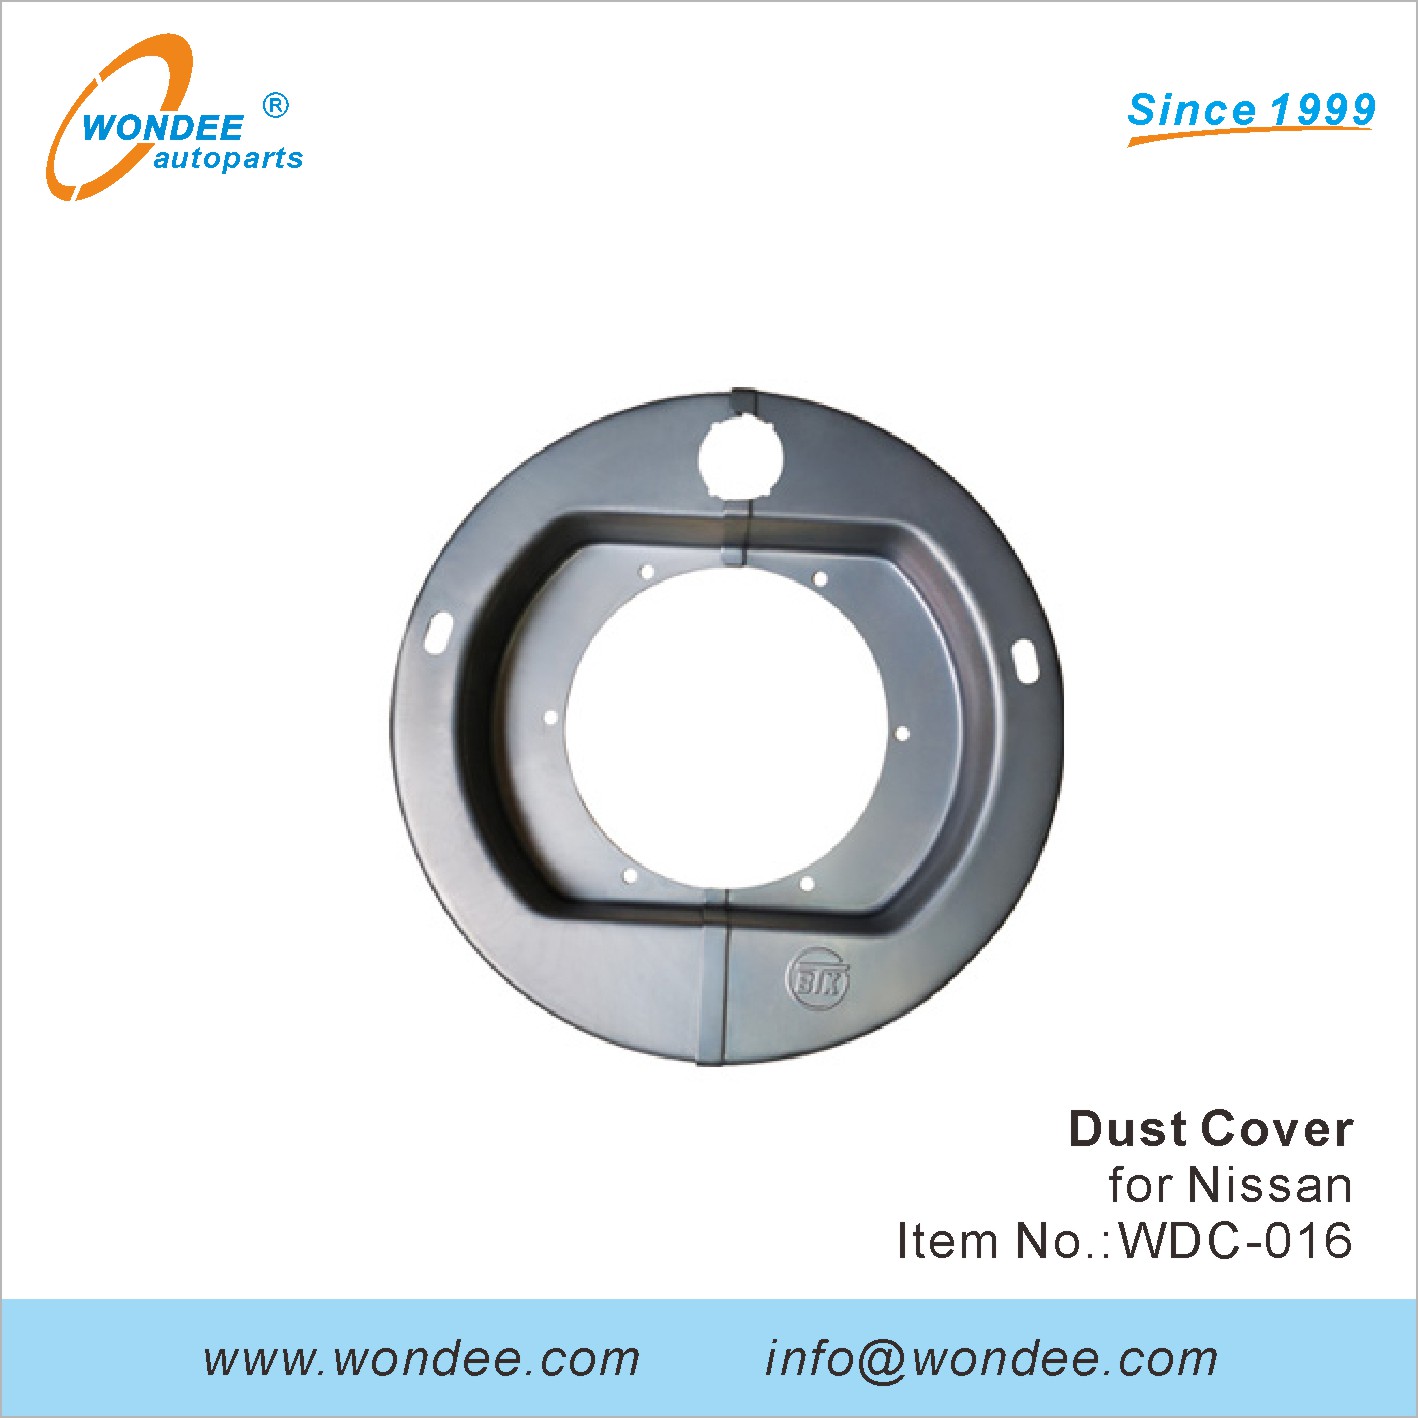 WONDEE dust cover (16)